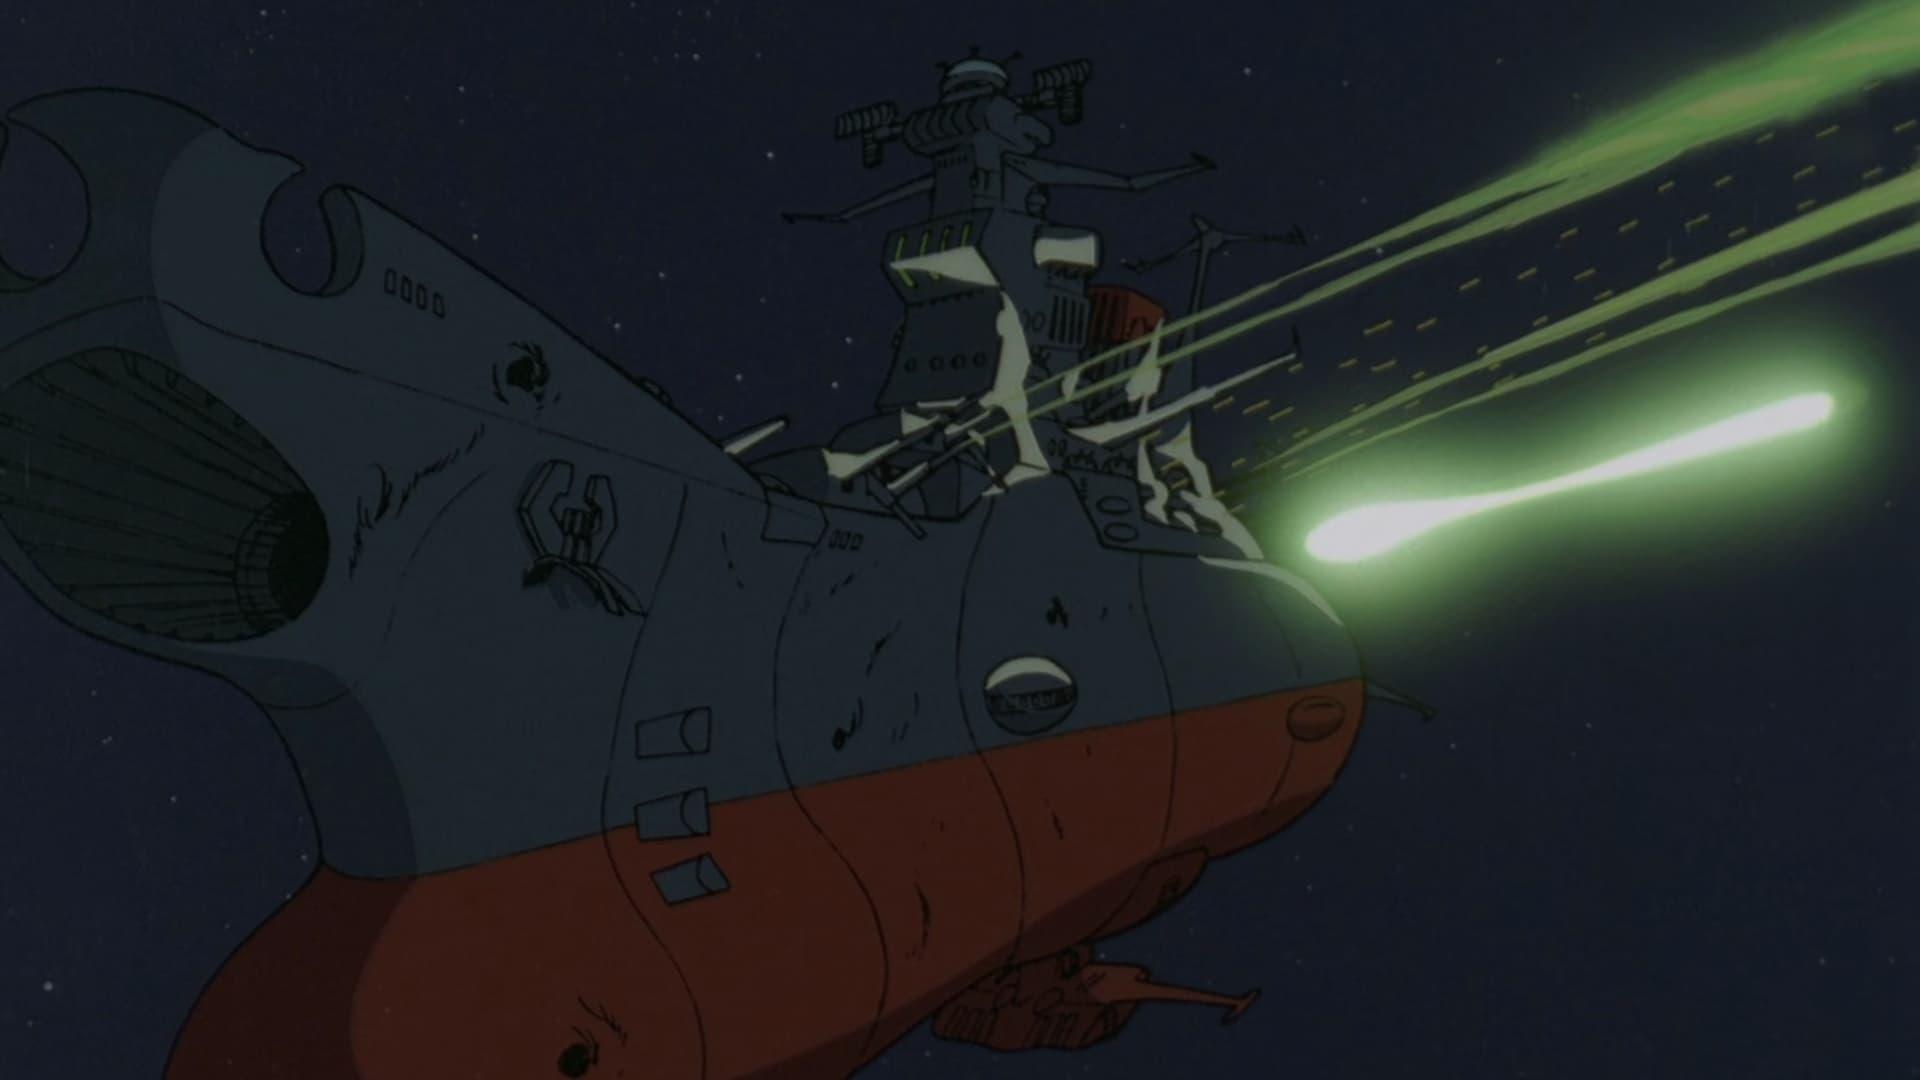 Farewell to Space Battleship Yamato backdrop